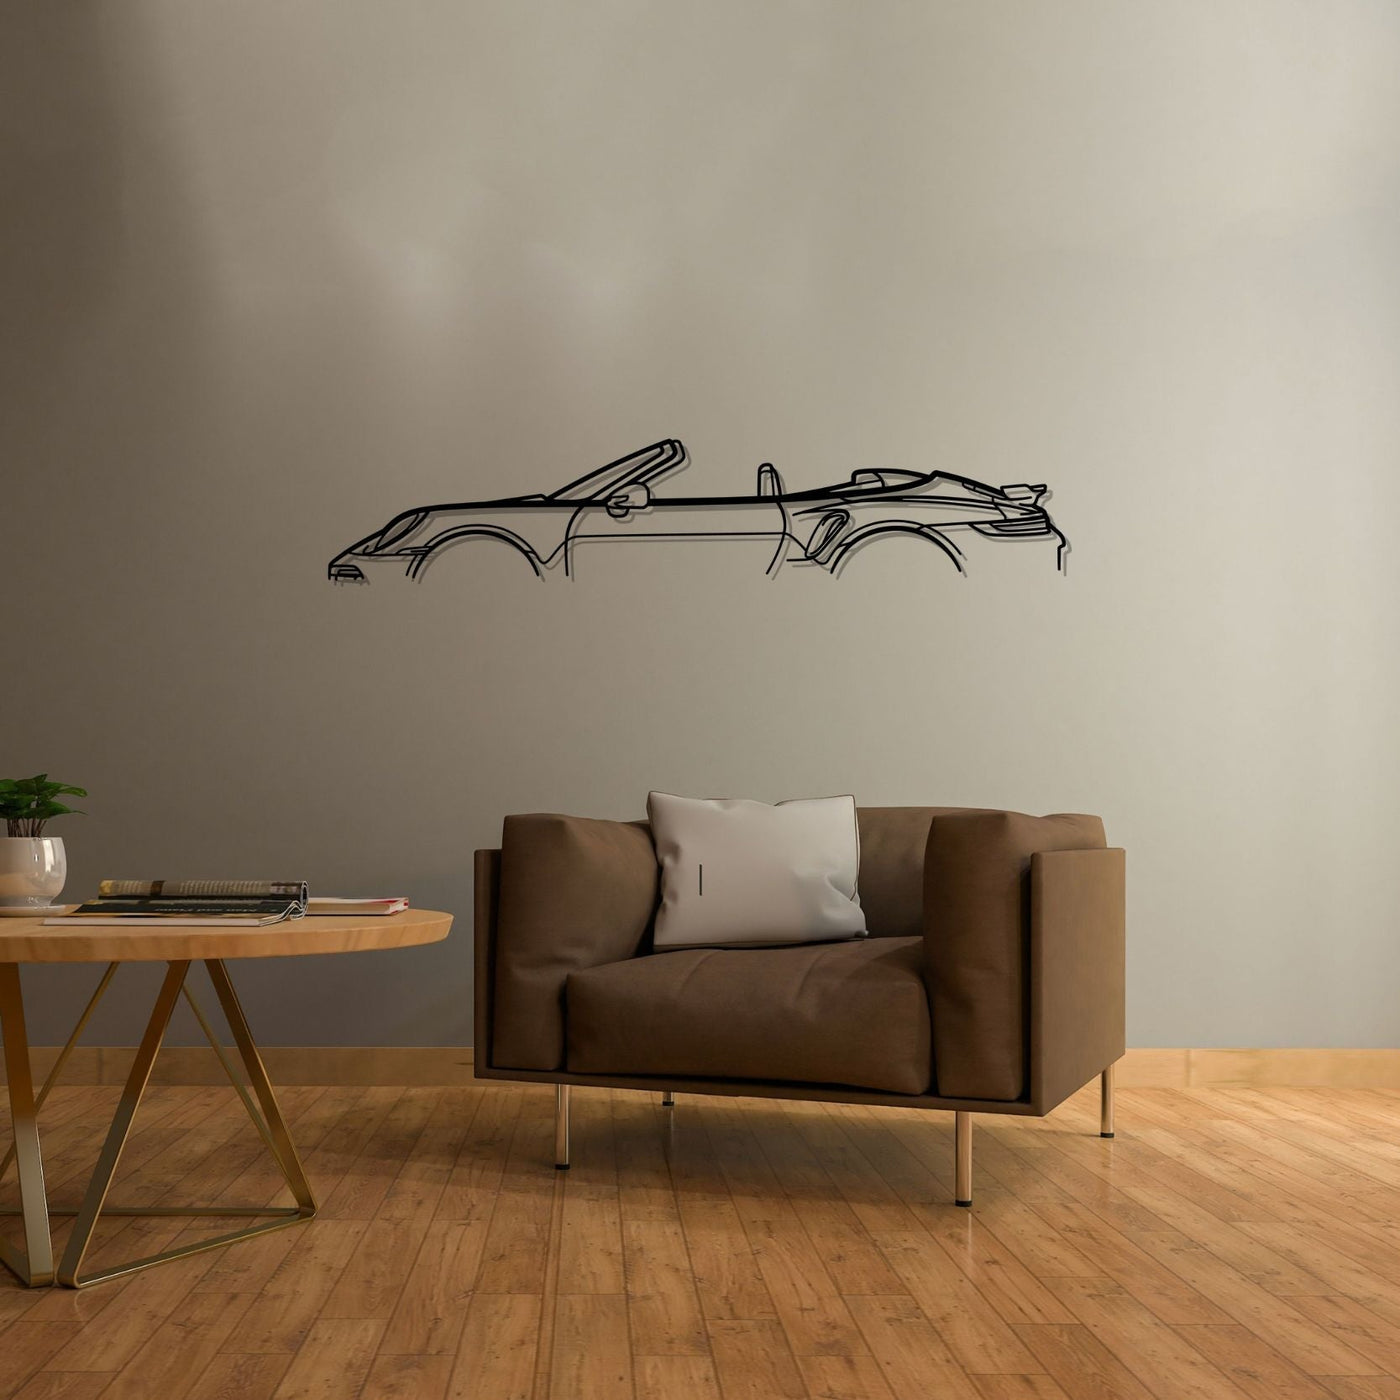 911 Turbo Cabrio model 992 Classic Silhouette Metal Wall Art